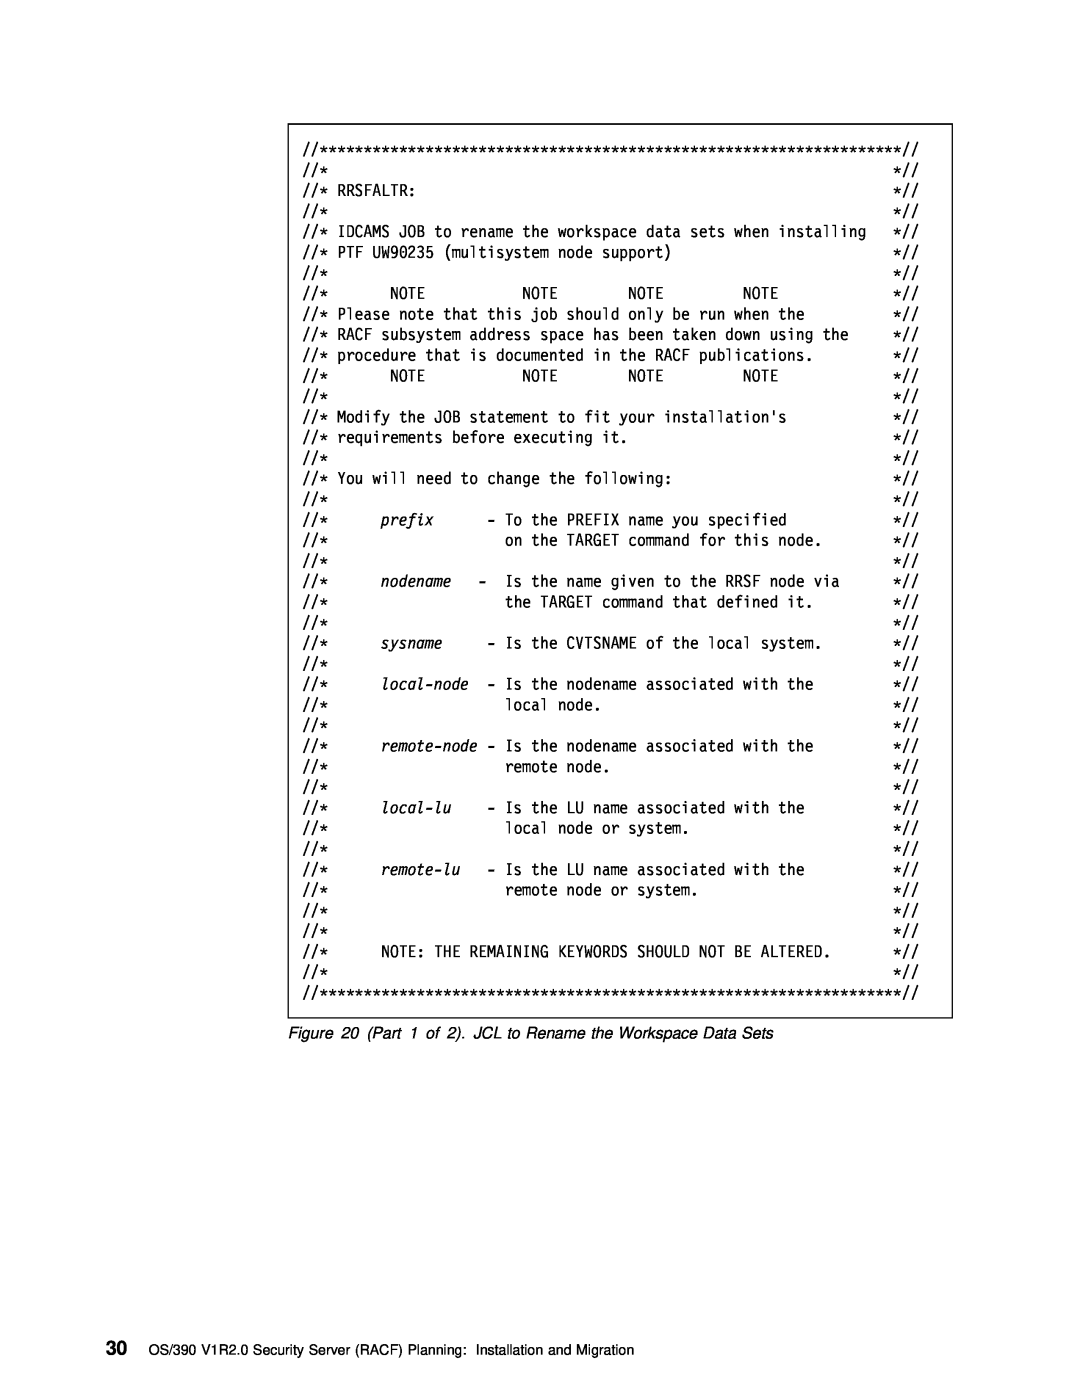 IBM GC28-1920-01 manual prefix, nodename, sysname, local-lu, remote-lu, Part 1 of 2. JCL to Rename the Workspace Data Sets 